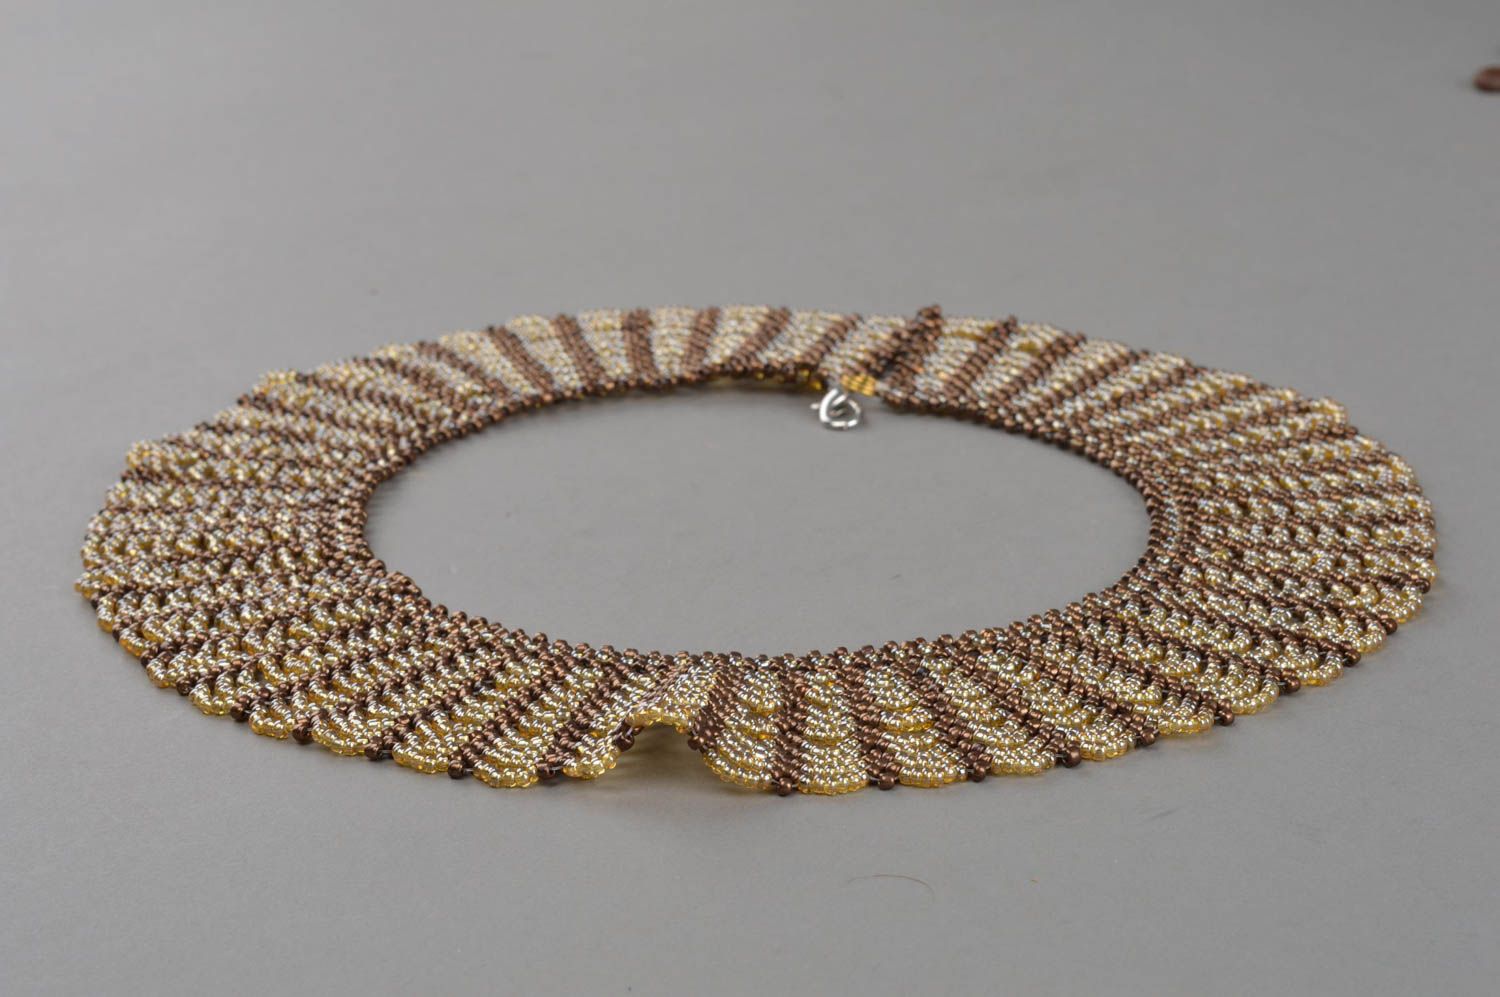 Beaded necklace handmade stylish accessory designer woven jewelry for women photo 2